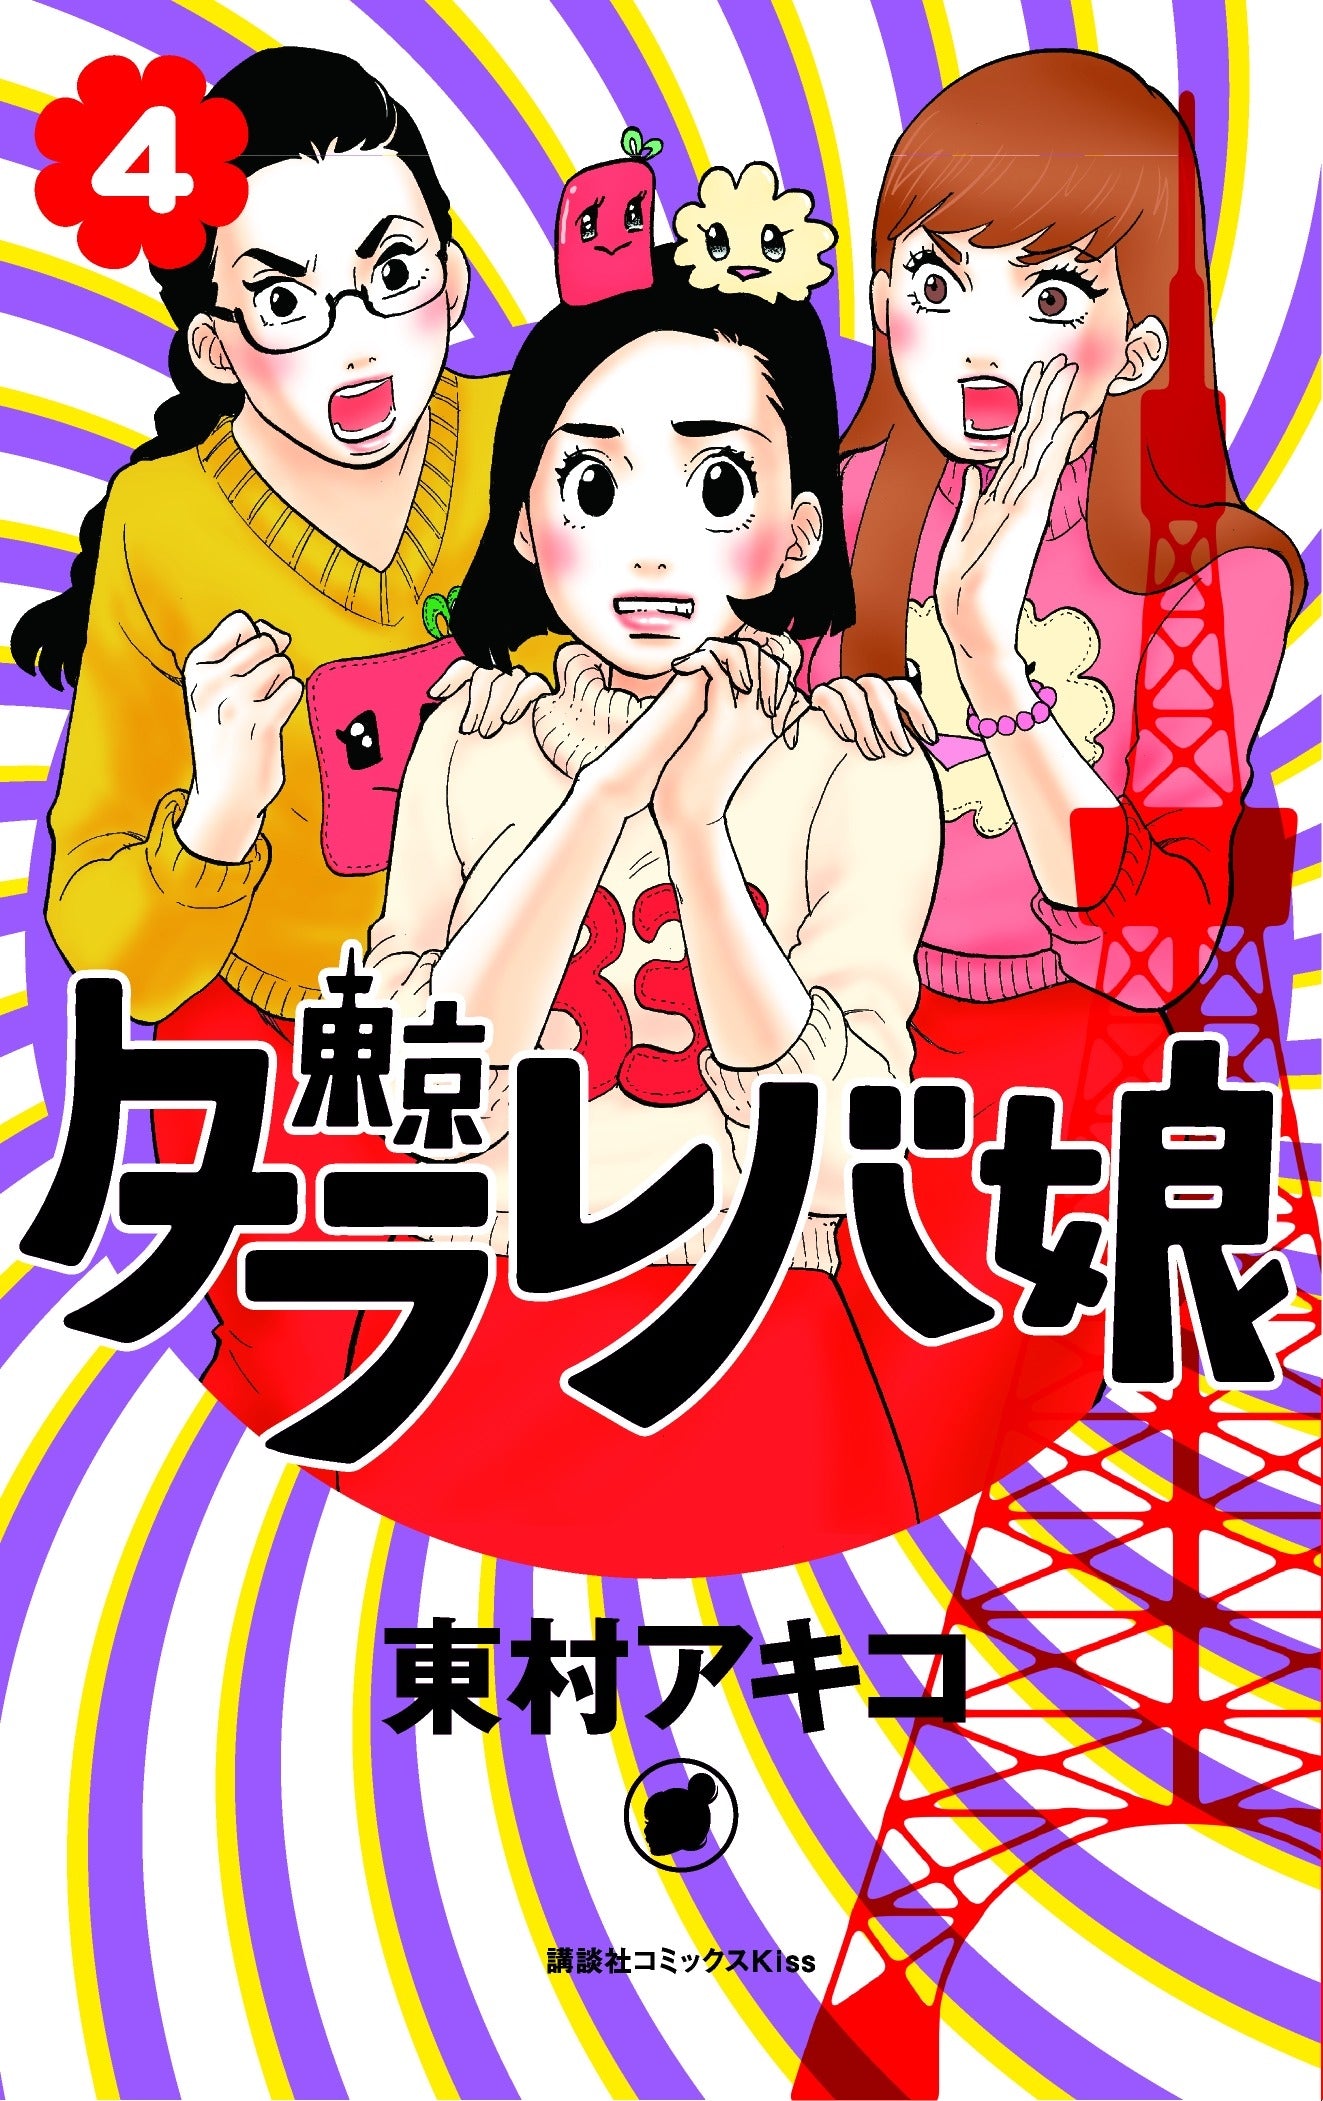 Tokyo Tarareba Girls 4 - Manga Warehouse